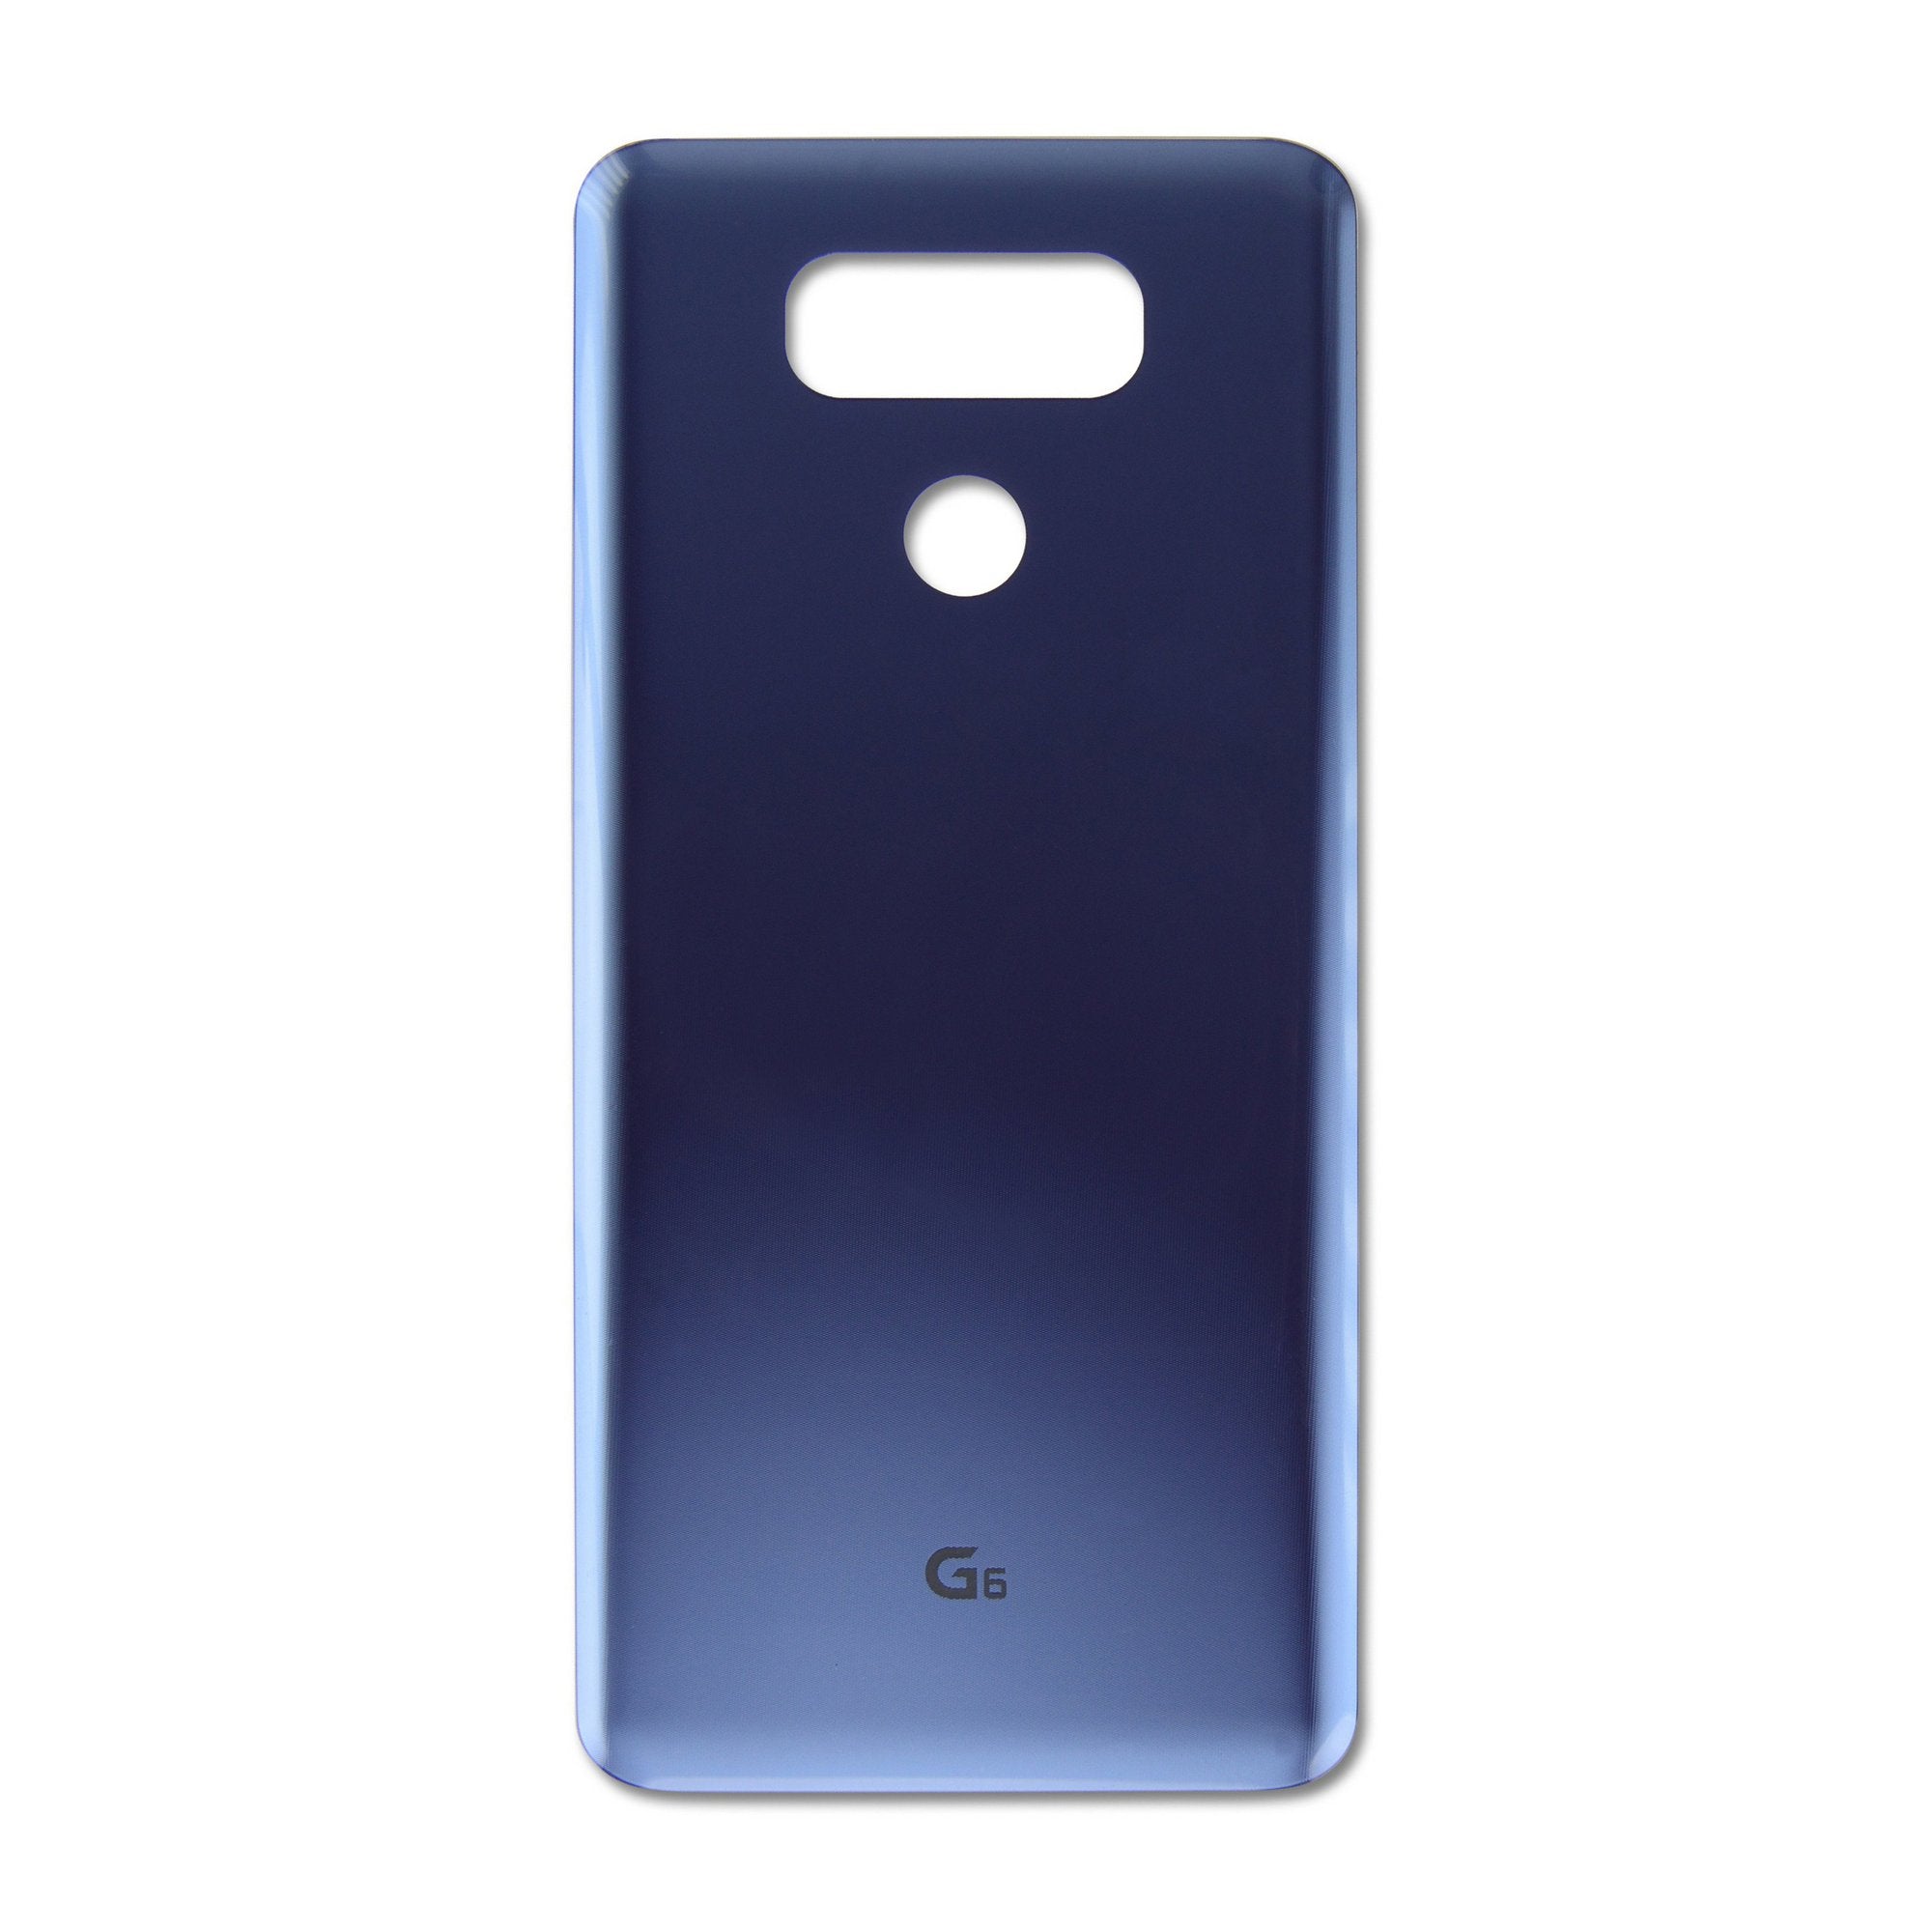 LG G6 Rear Glass Panel Blue New